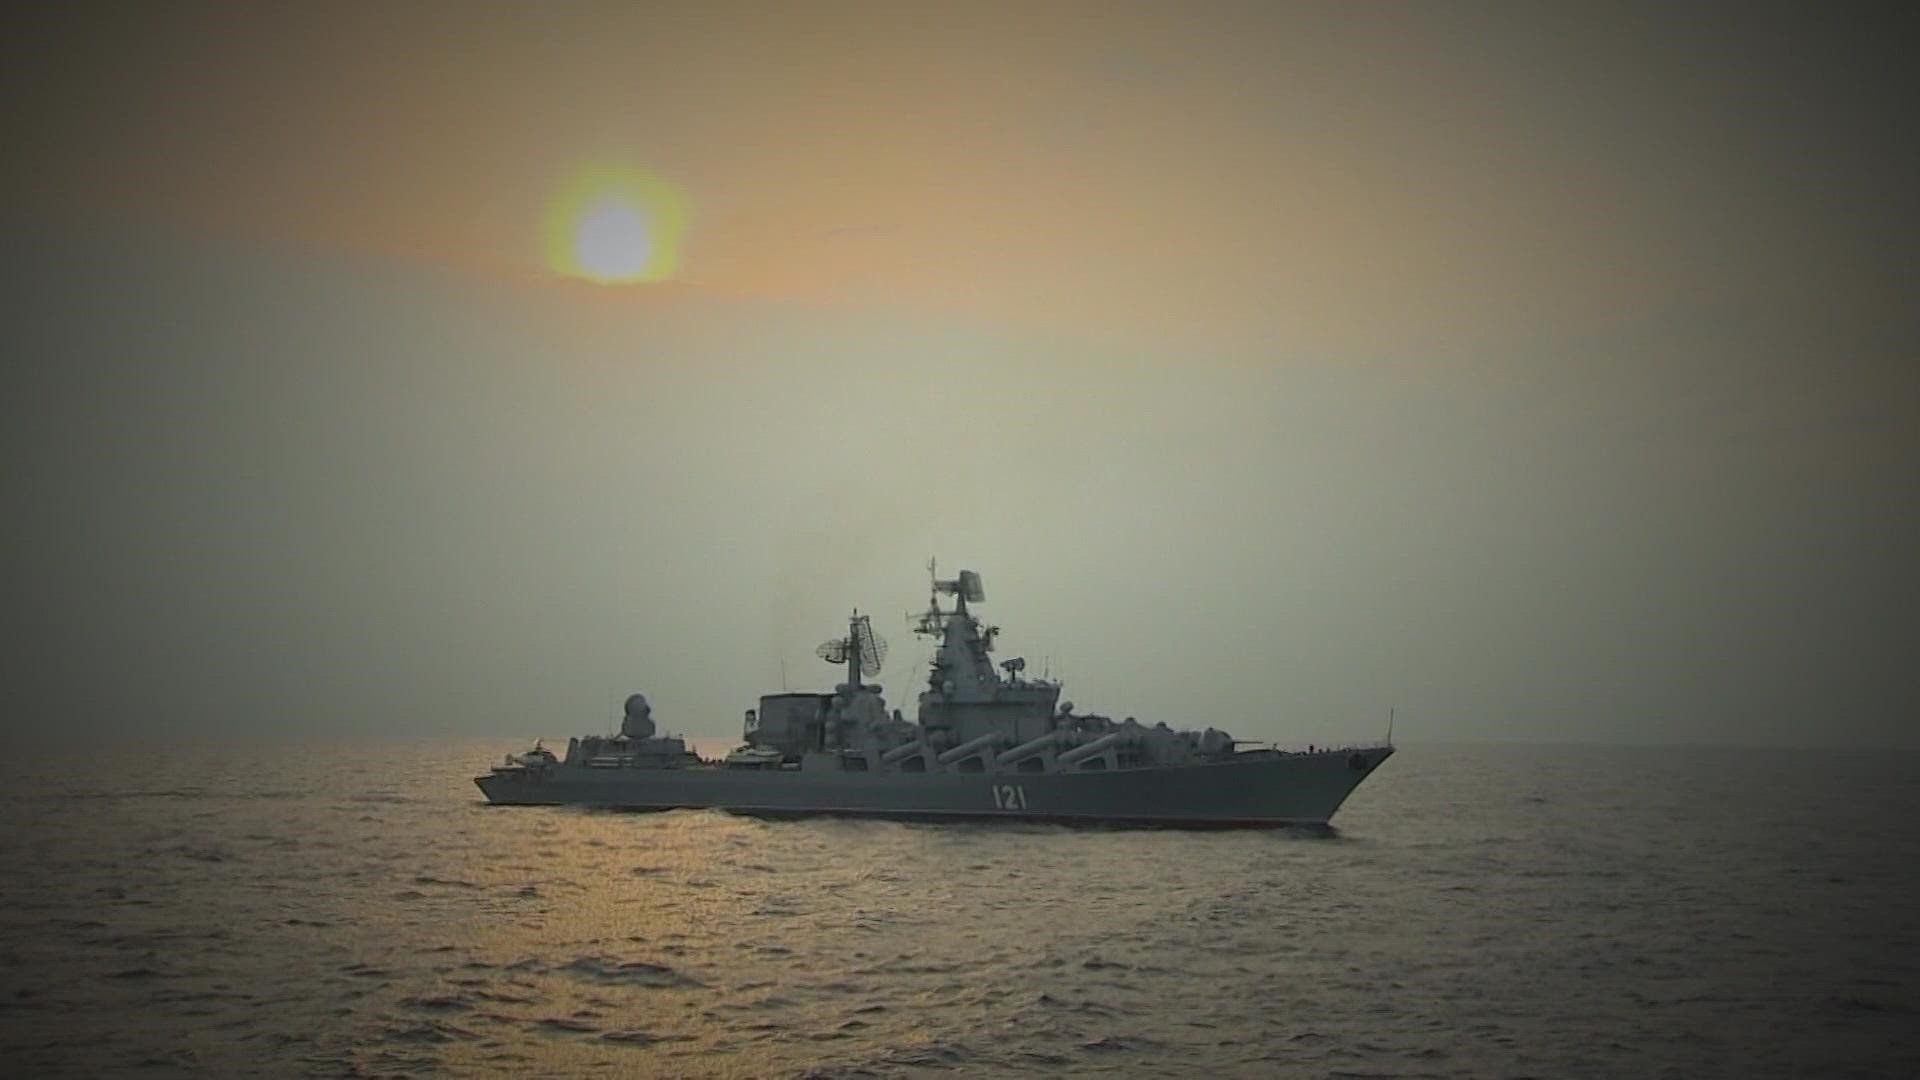 Overnight Ukrainian forces sunk a Russian war ship in the Black Sea.